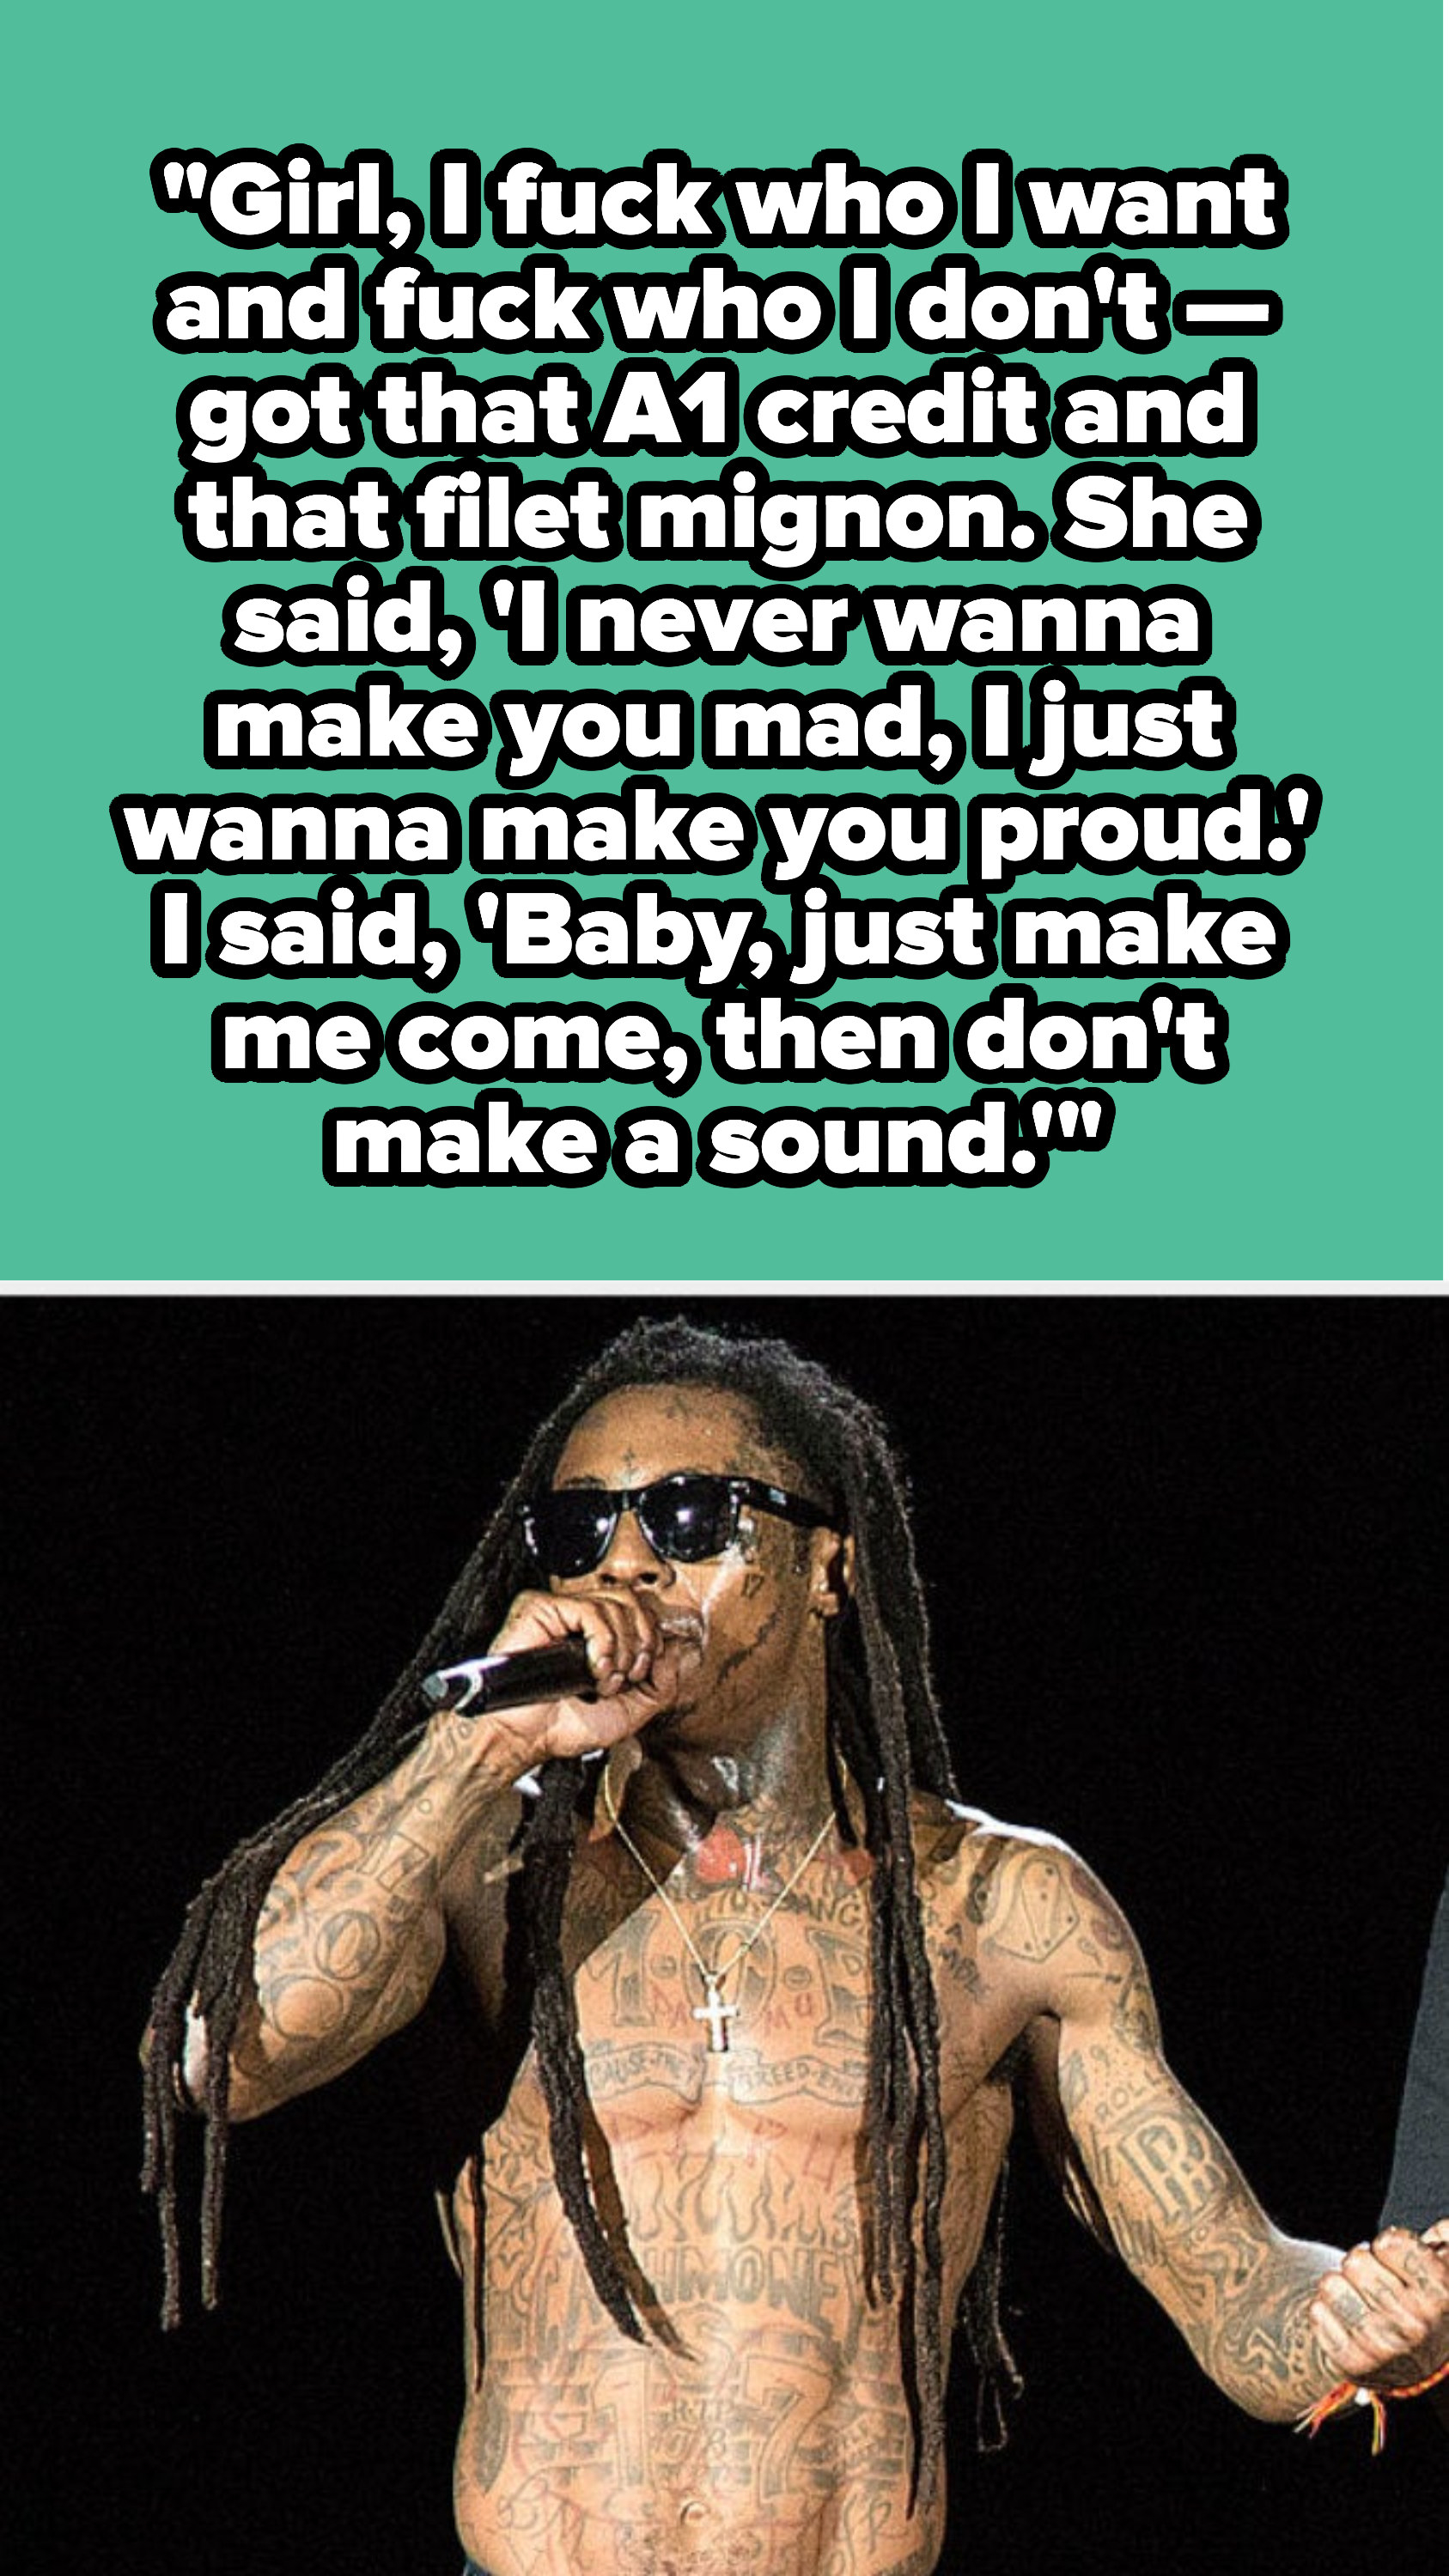 Lil Wayne lyrics: &quot;She said, &#x27;I never wanna make you mad, I just wanna make you proud.&#x27; I said, &#x27;Baby, just make me come, then don&#x27;t make a sound&#x27;&quot;